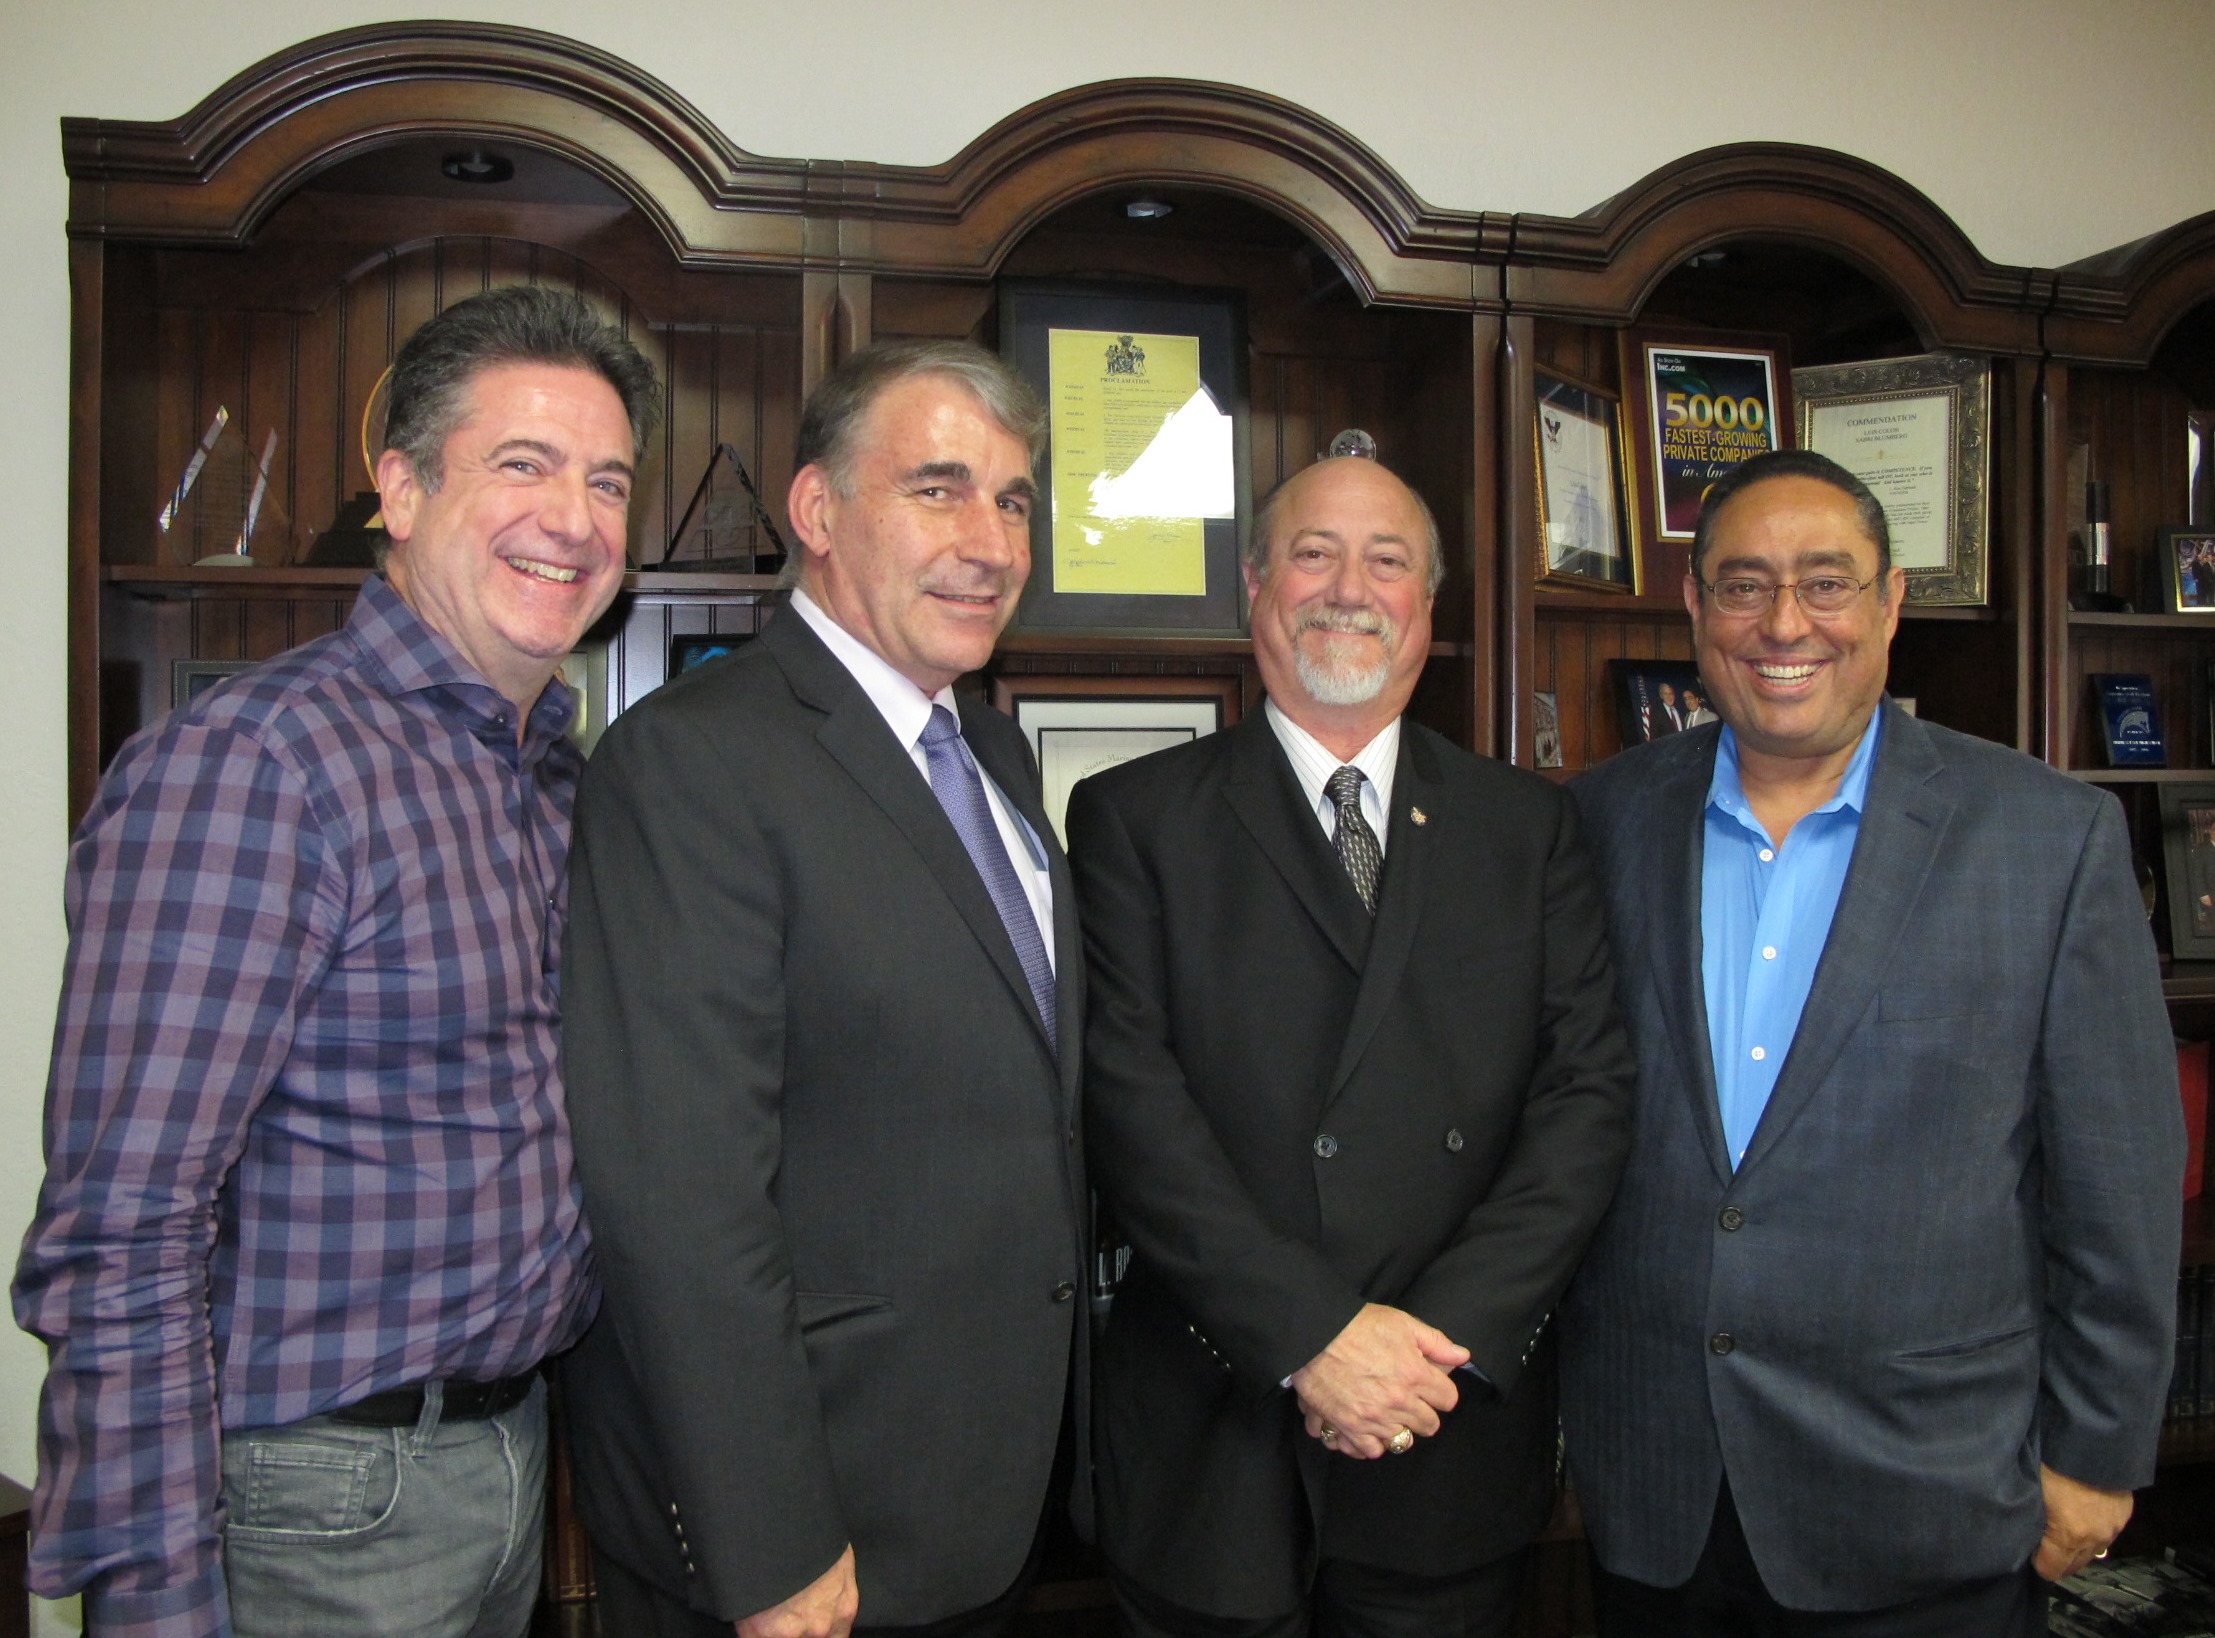 Patrick Clouden, Dave Meyer, John Redman and Luis Colón